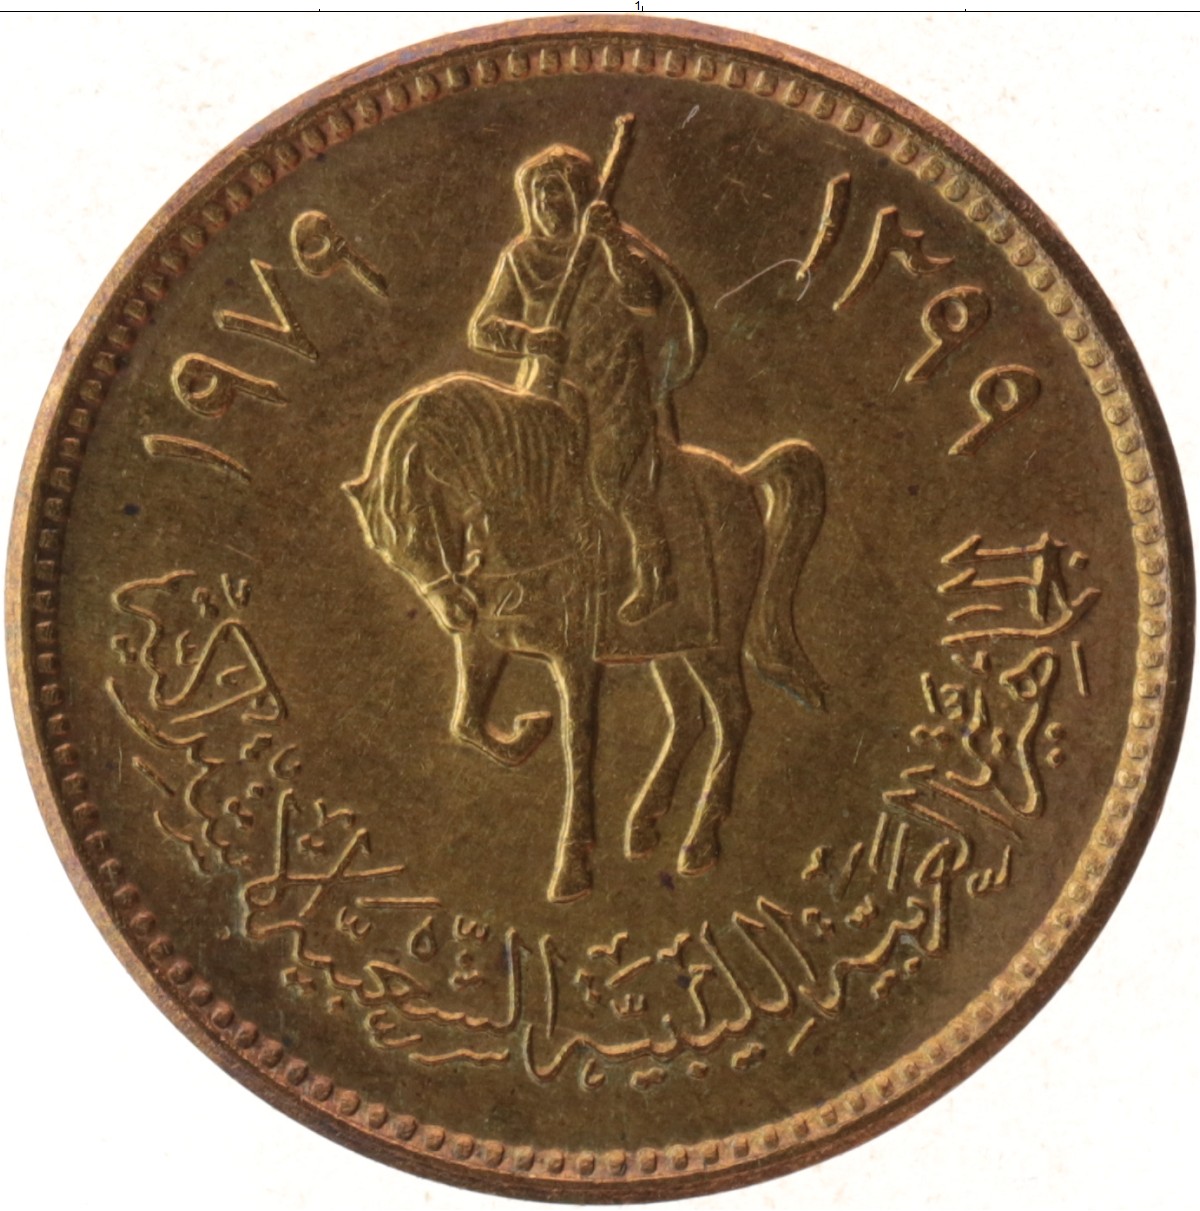 1 дирхам монета. Монета 20 дирхам 1979 Ливия. Монеты Ливия. Libya монеты. 50 Дирхам монета.